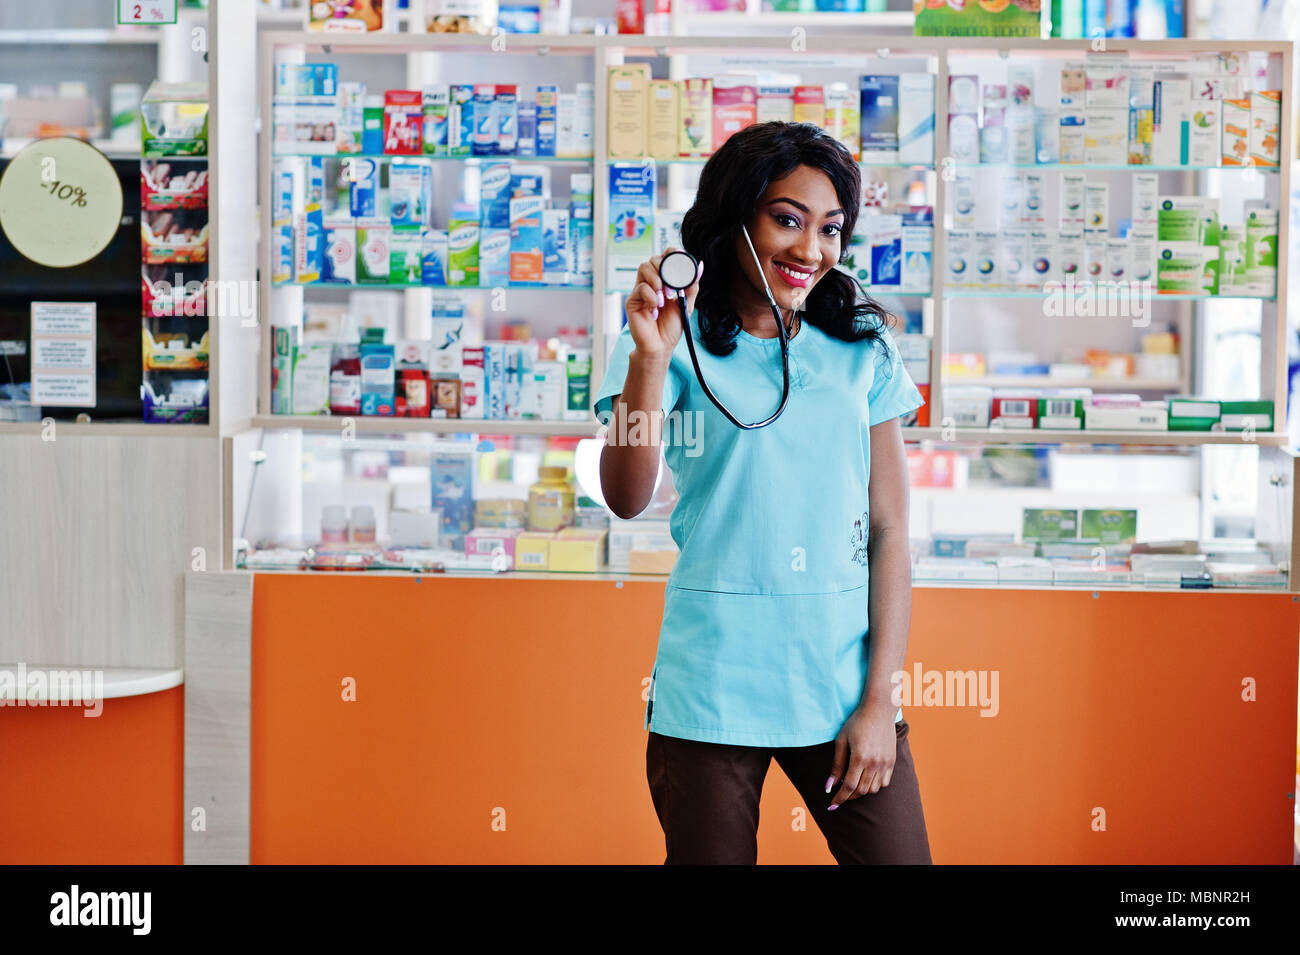 Afrikanische amerikanische Apotheker in der Apotheke am Krankenhaus Apotheke  arbeiten. Afrikanische healthcare. Stethoskop auf schwarze Frau Doktor  Stockfotografie - Alamy